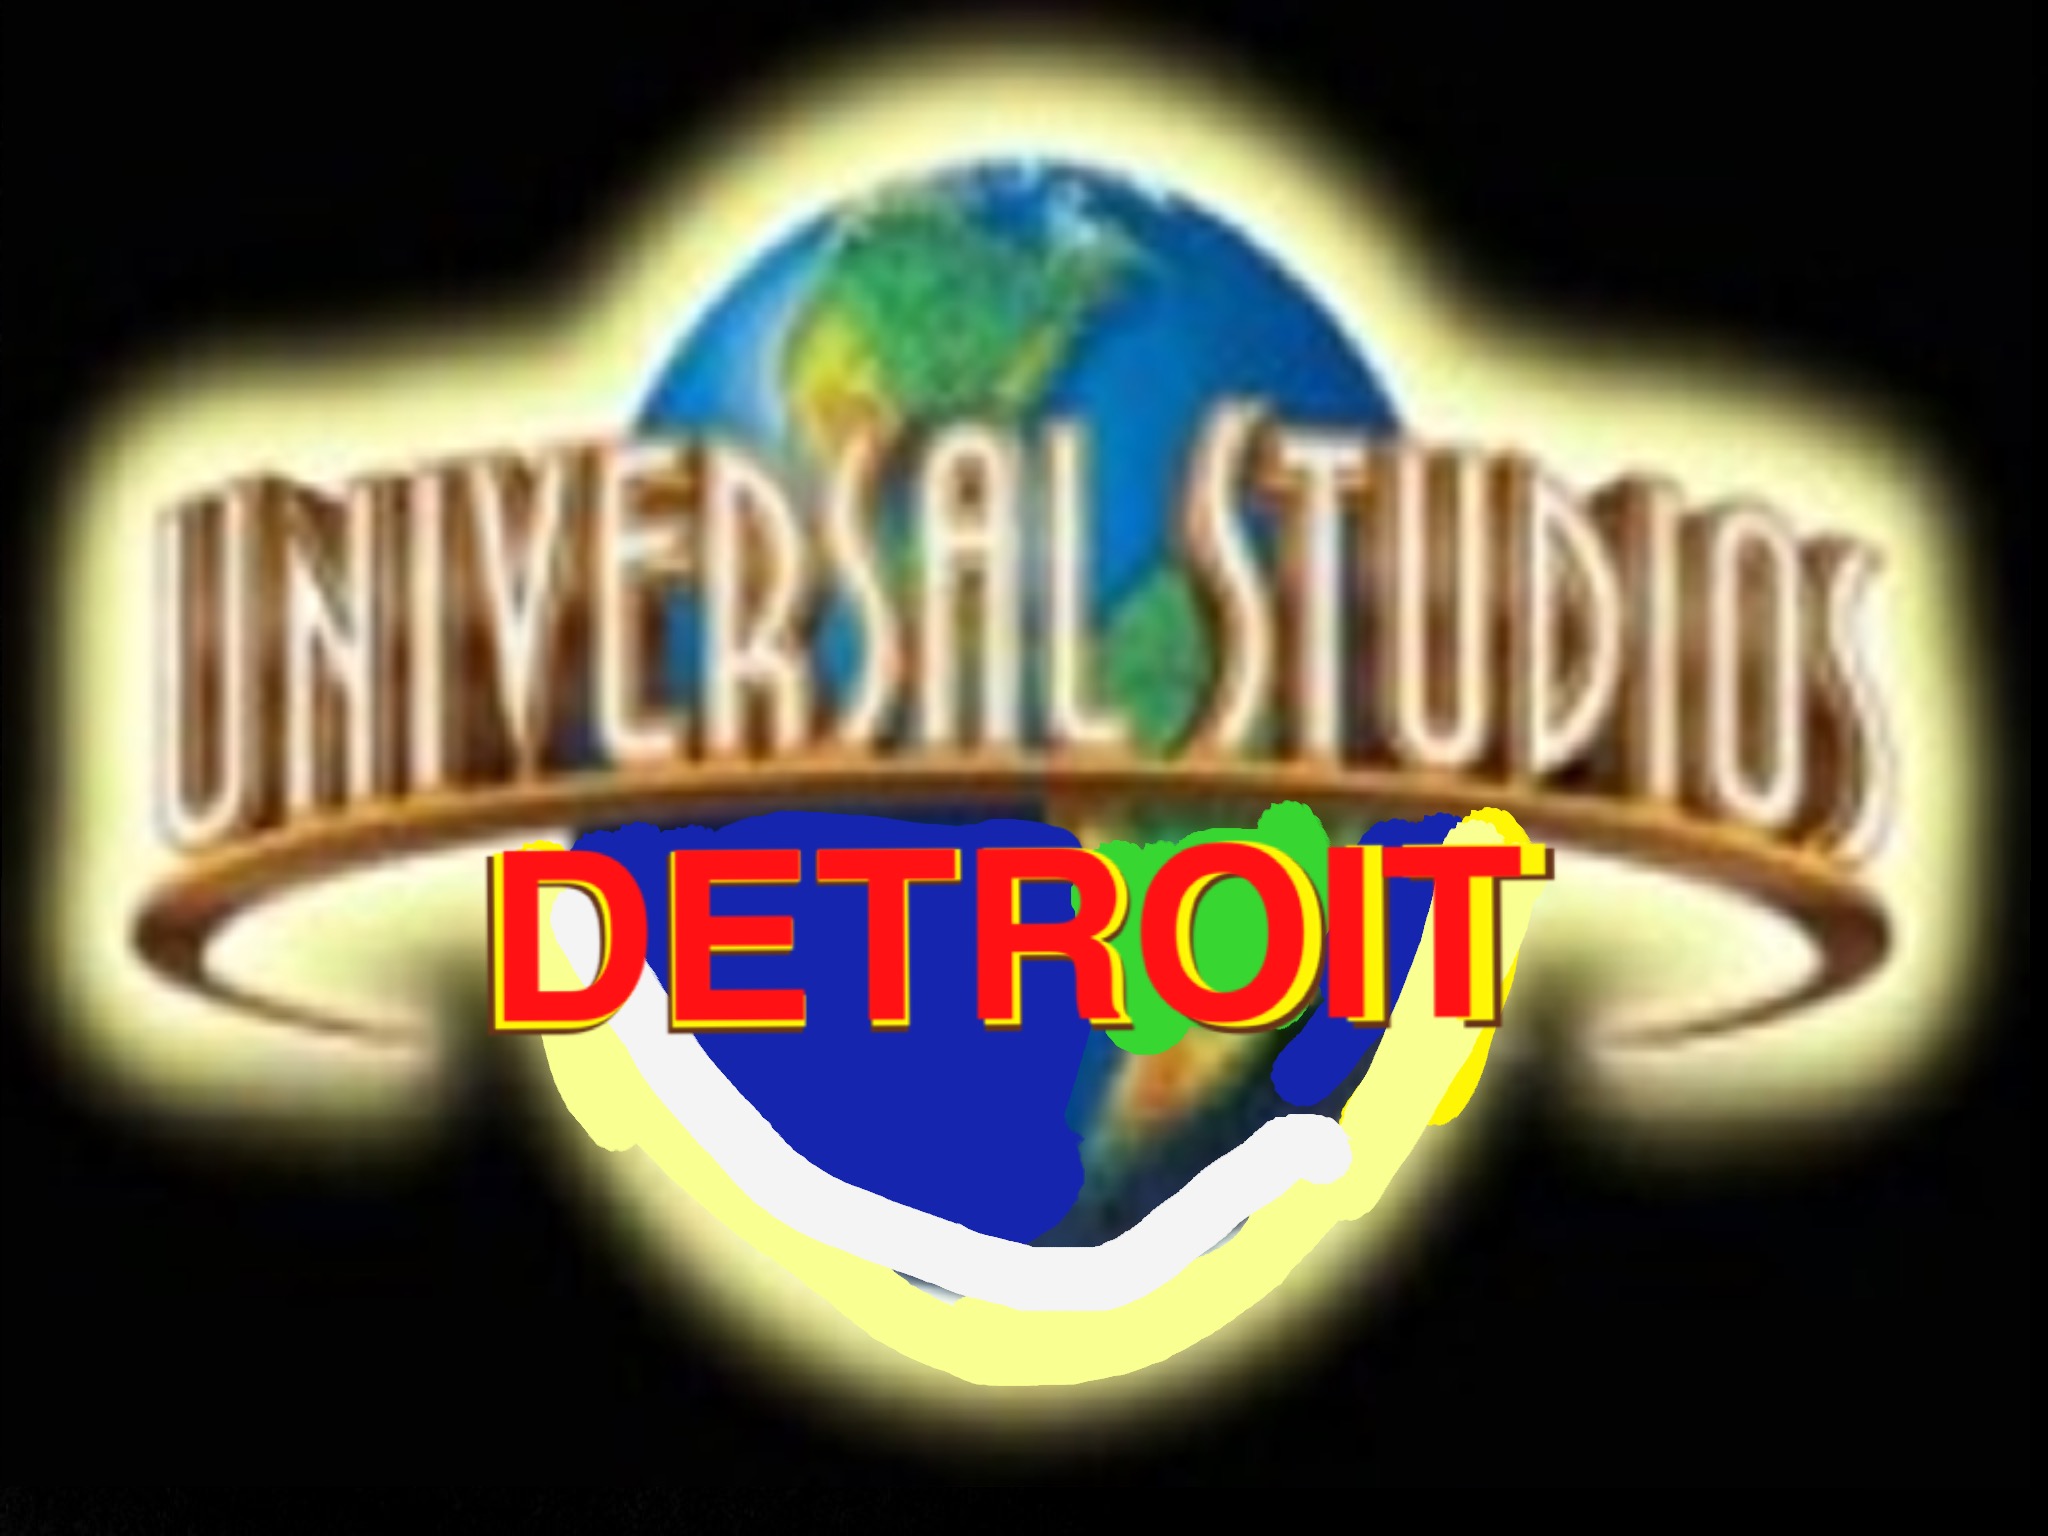 Universal Studios Detroit Universal Studios Theme Park Fanon - orlando airport tram roblox